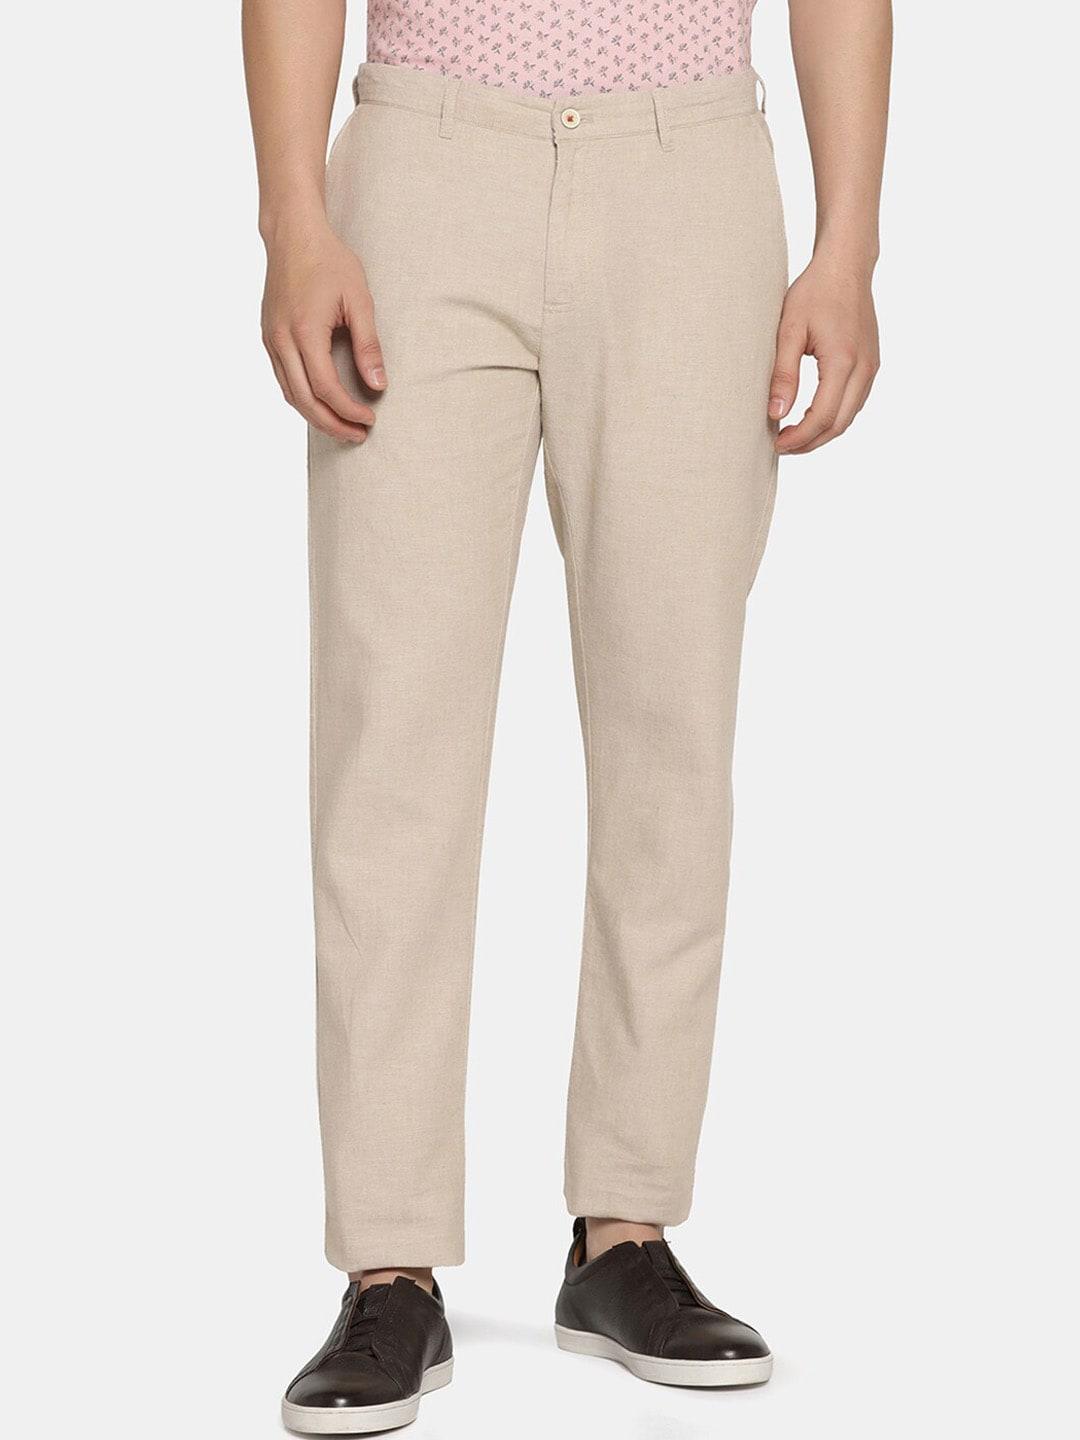 blackberrys-men-slim-fit-linen-cotton-chinos-trousers